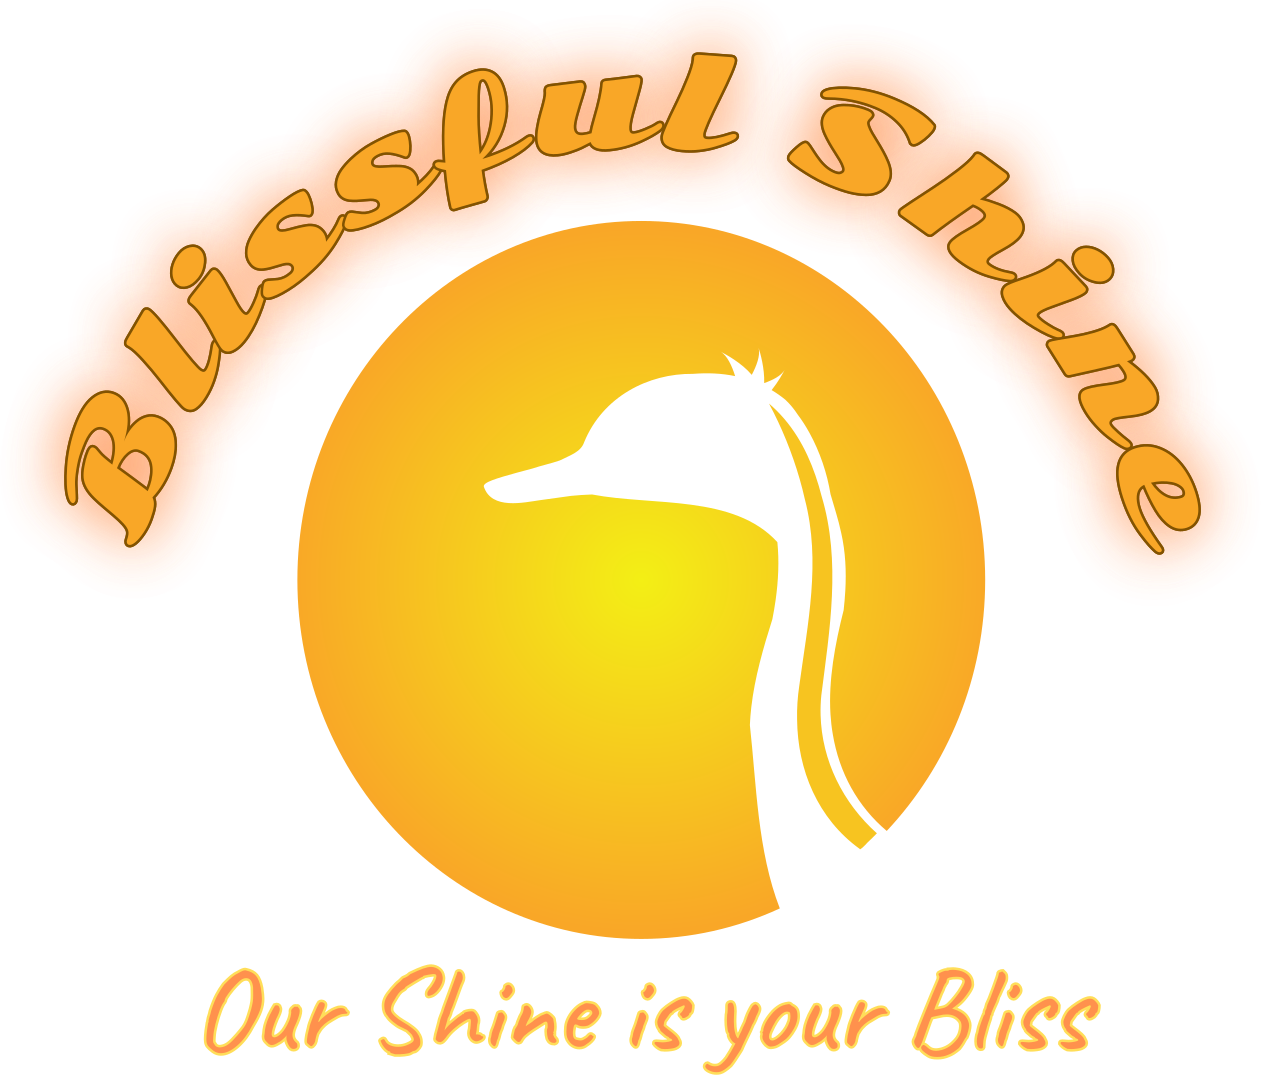 Blissful Shine's web page